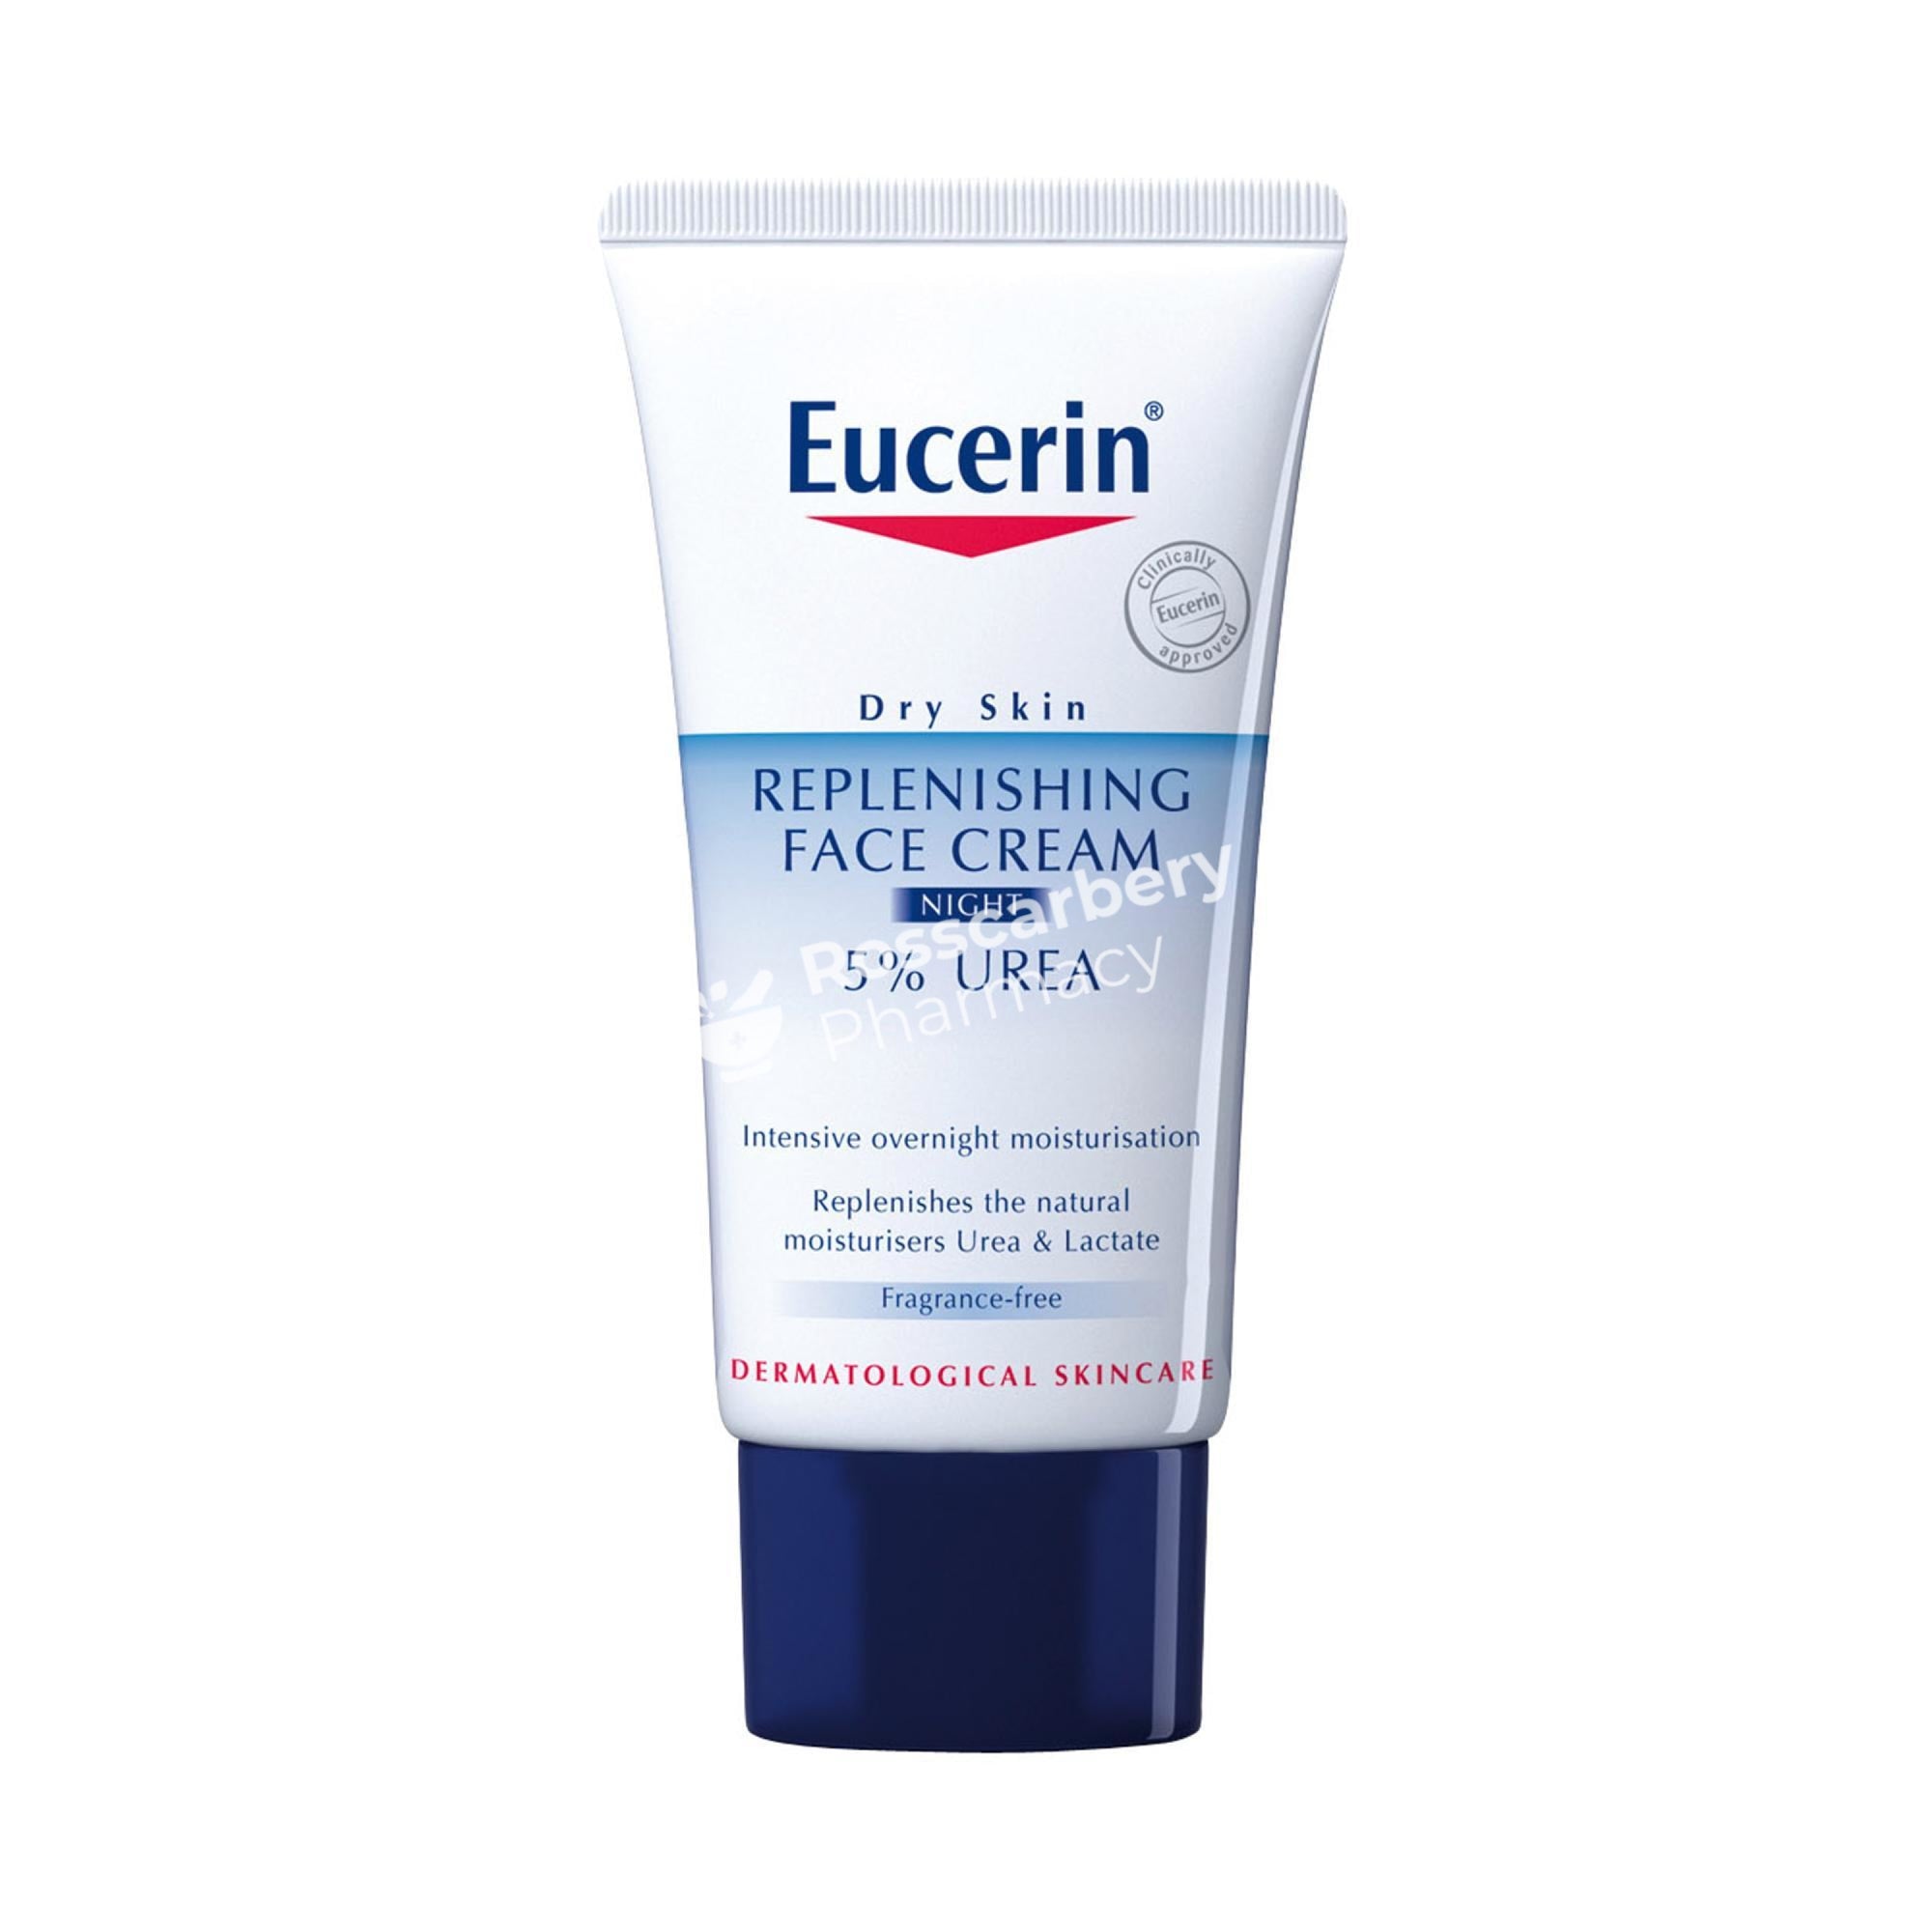 Eucerin Very Dry Urea 5% Skin Replenishing Face Cream Night Facial Moisturiser